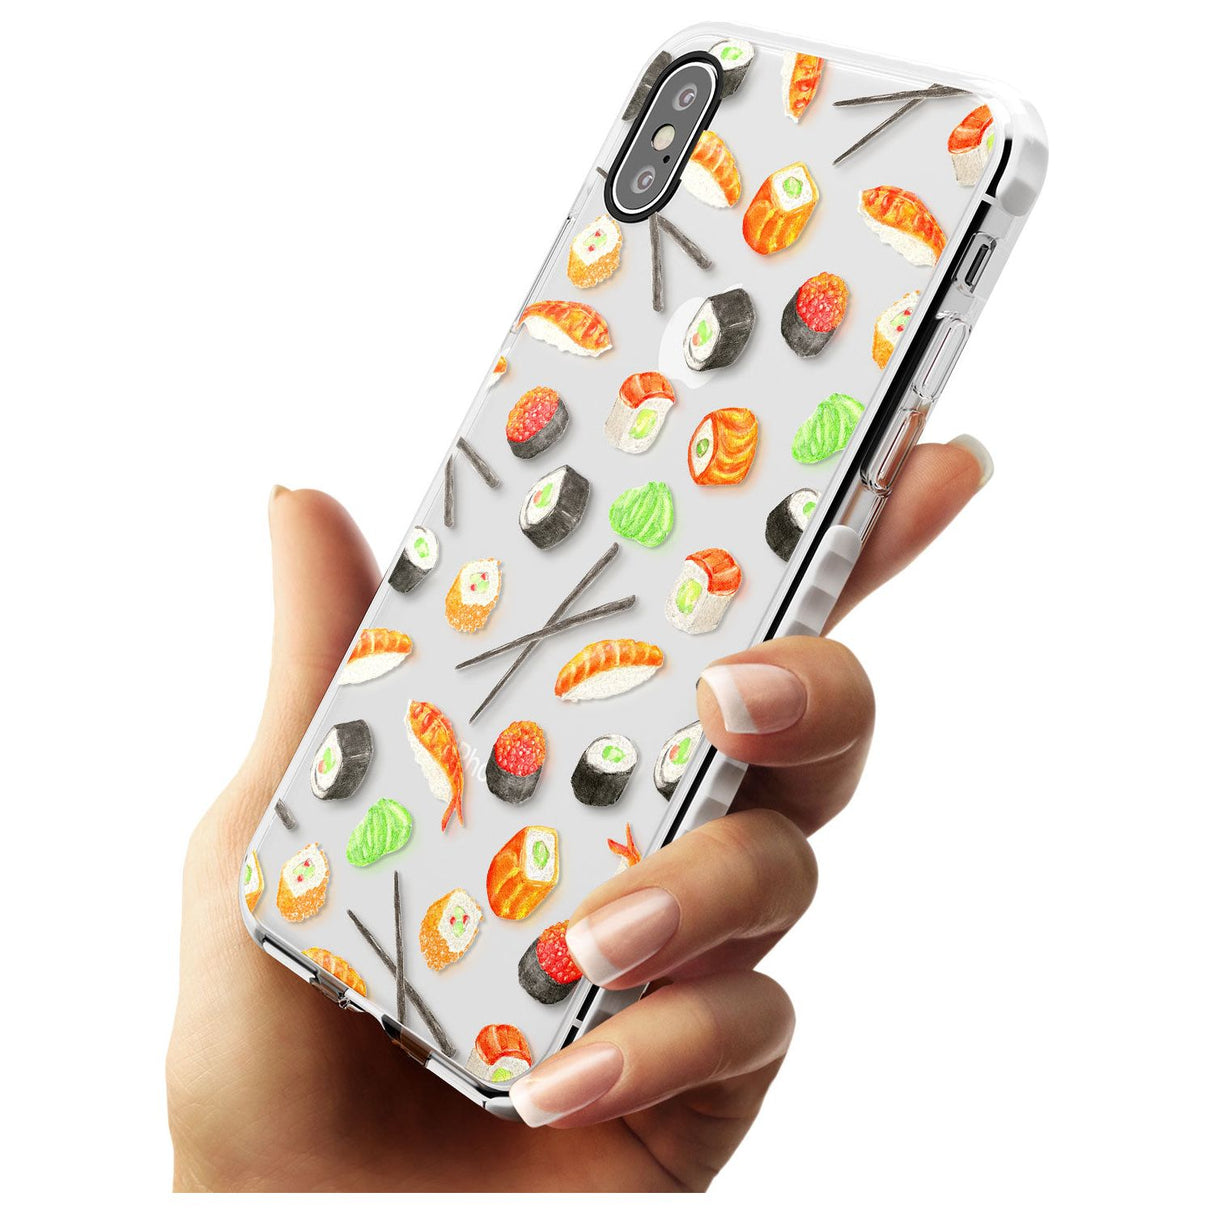 Sushi & Chopsticks Watercolour Pattern Impact Phone Case for iPhone X XS Max XR